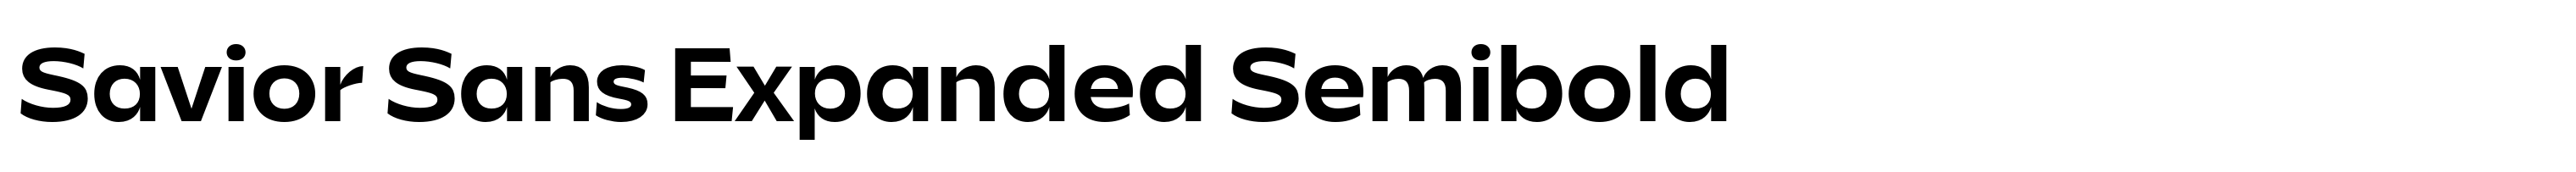 Savior Sans Expanded Semibold